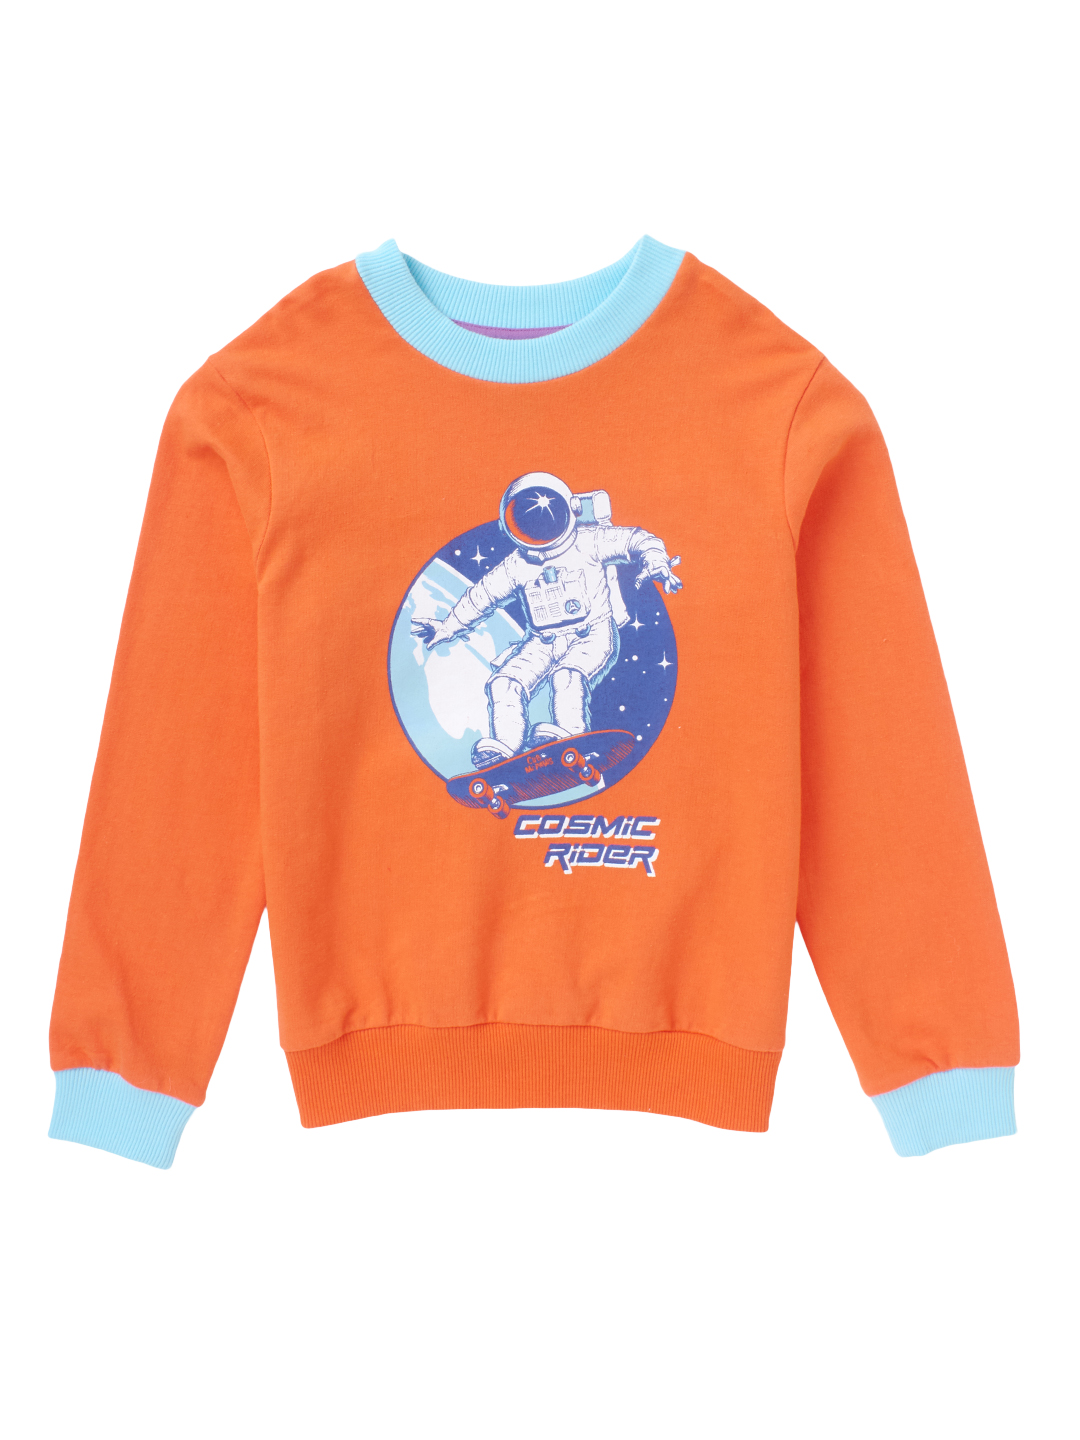 Boys Regular Fit Cotton Crew Neck Fashion Sweatshirt, Orange